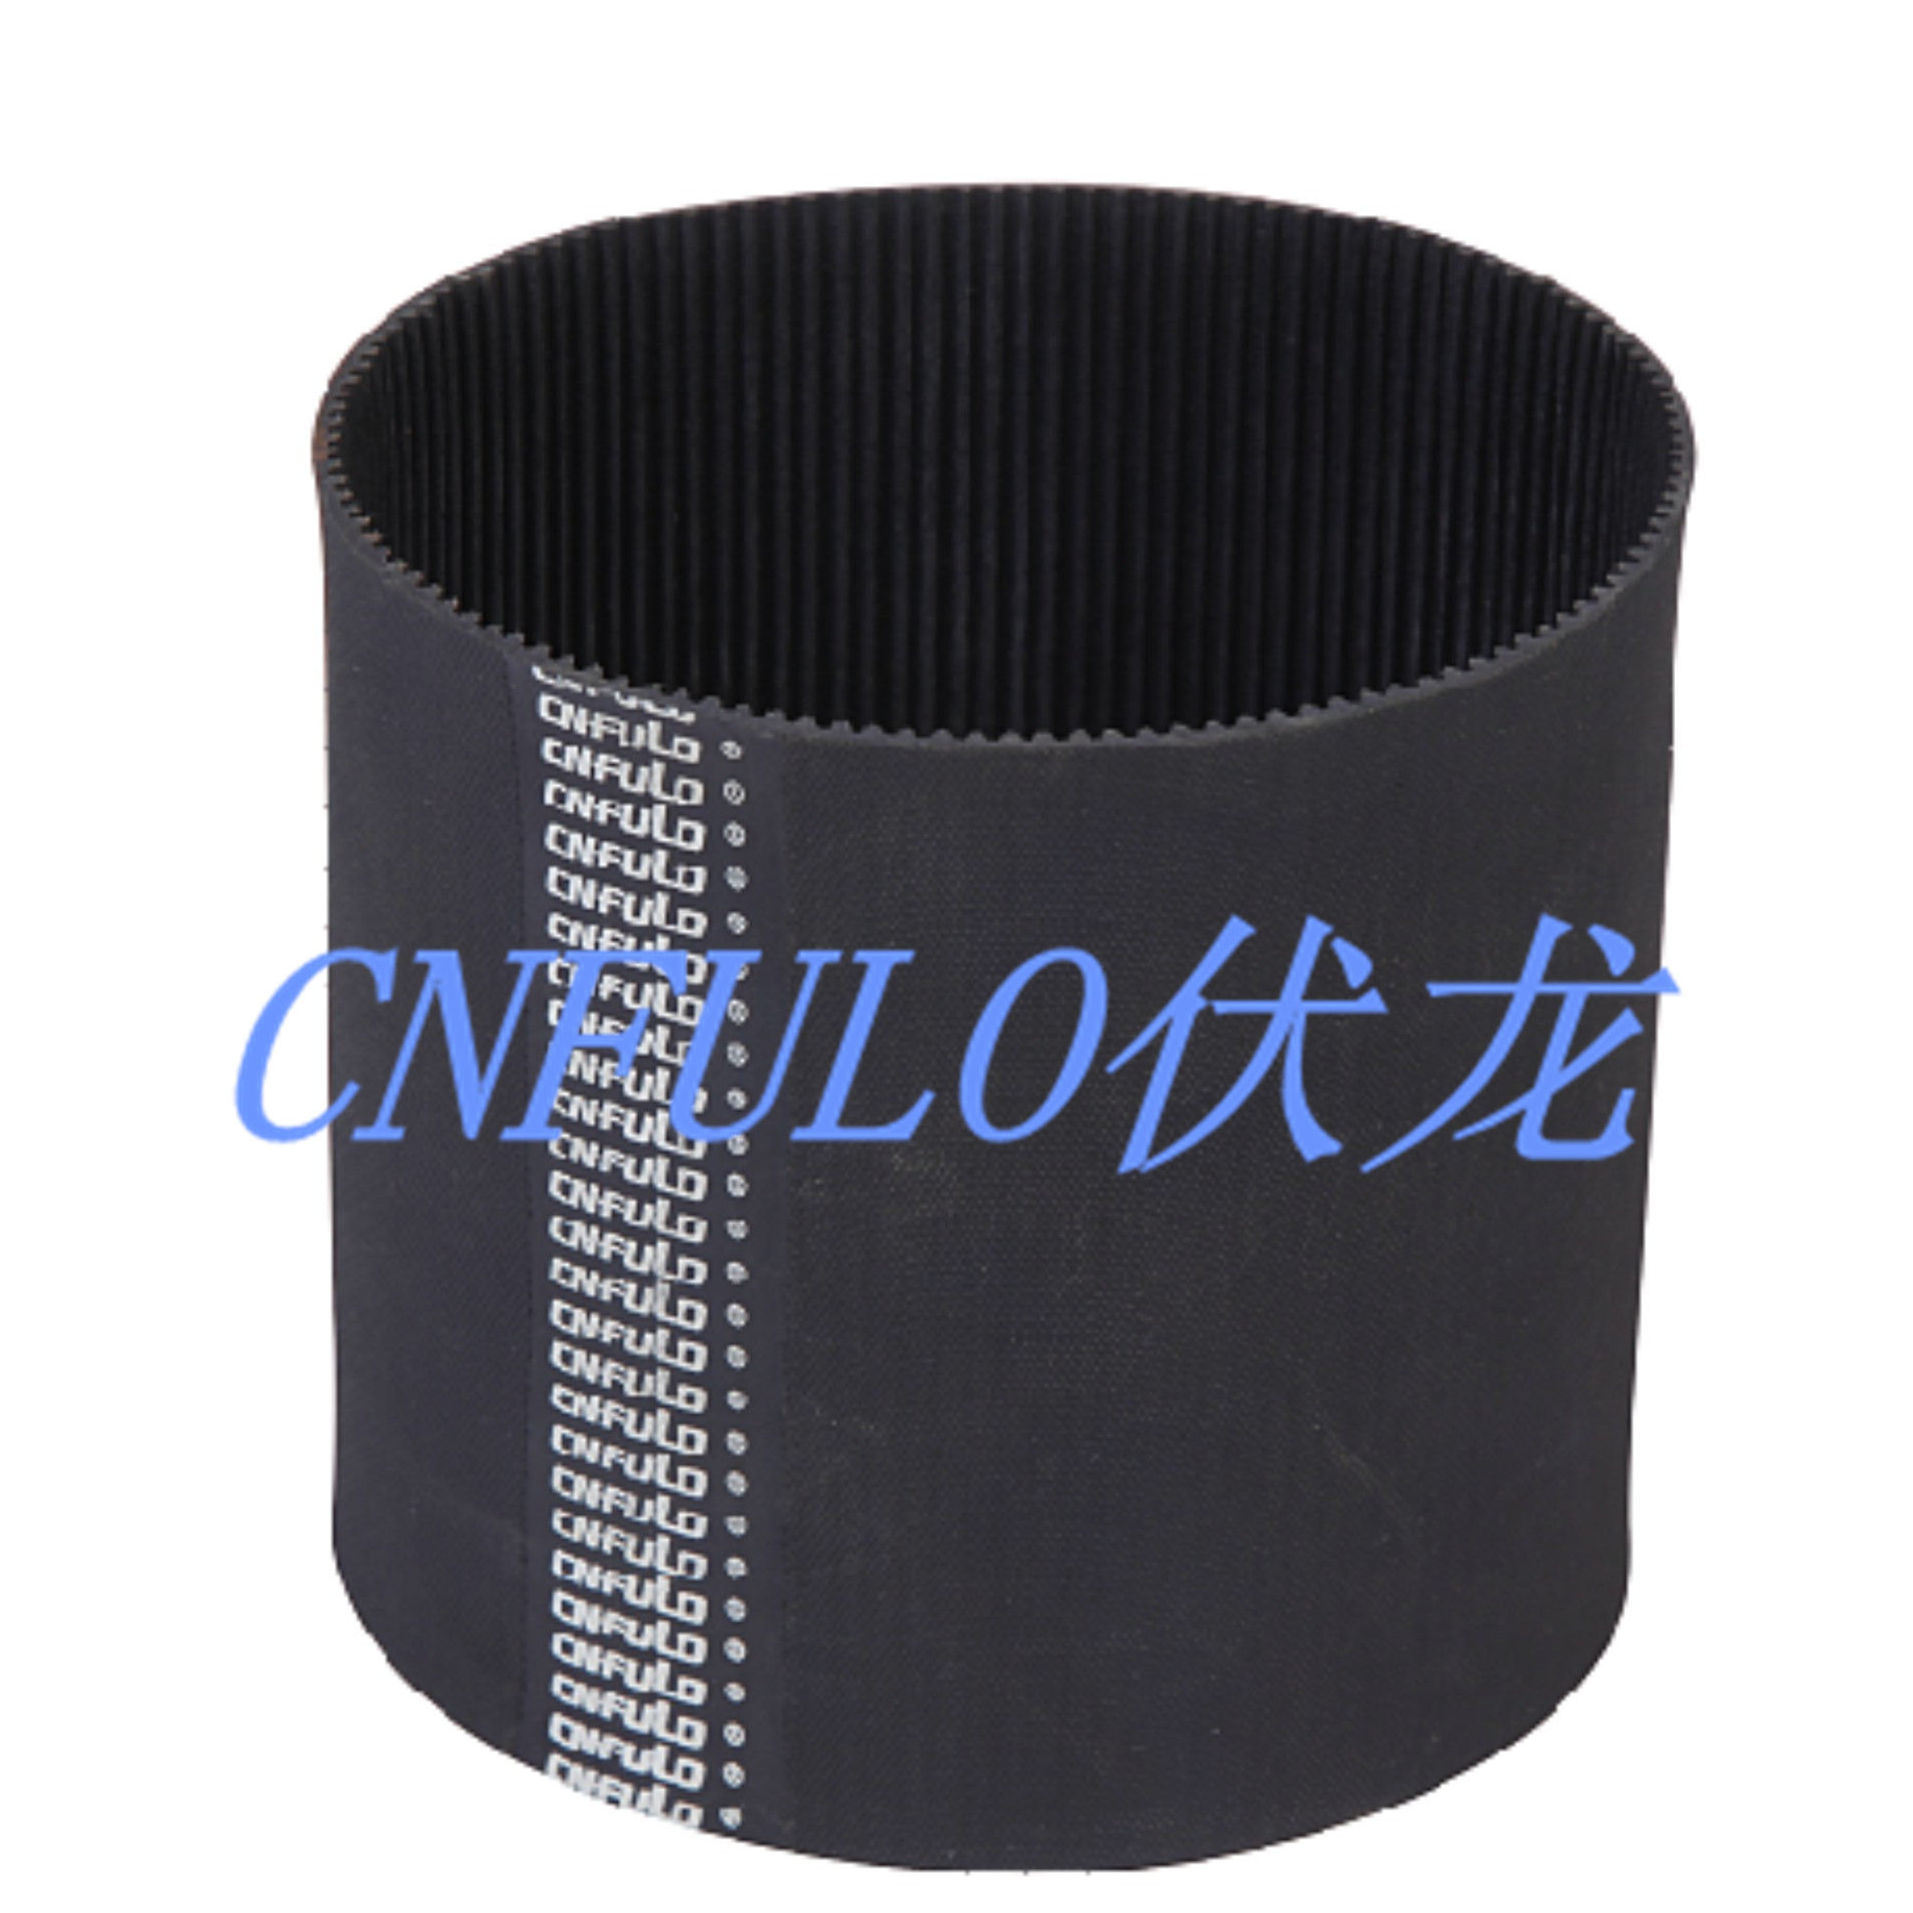 Industrial Rubber Timing Belt, Power Transmission/Texitle/Printer Belt, 2700L